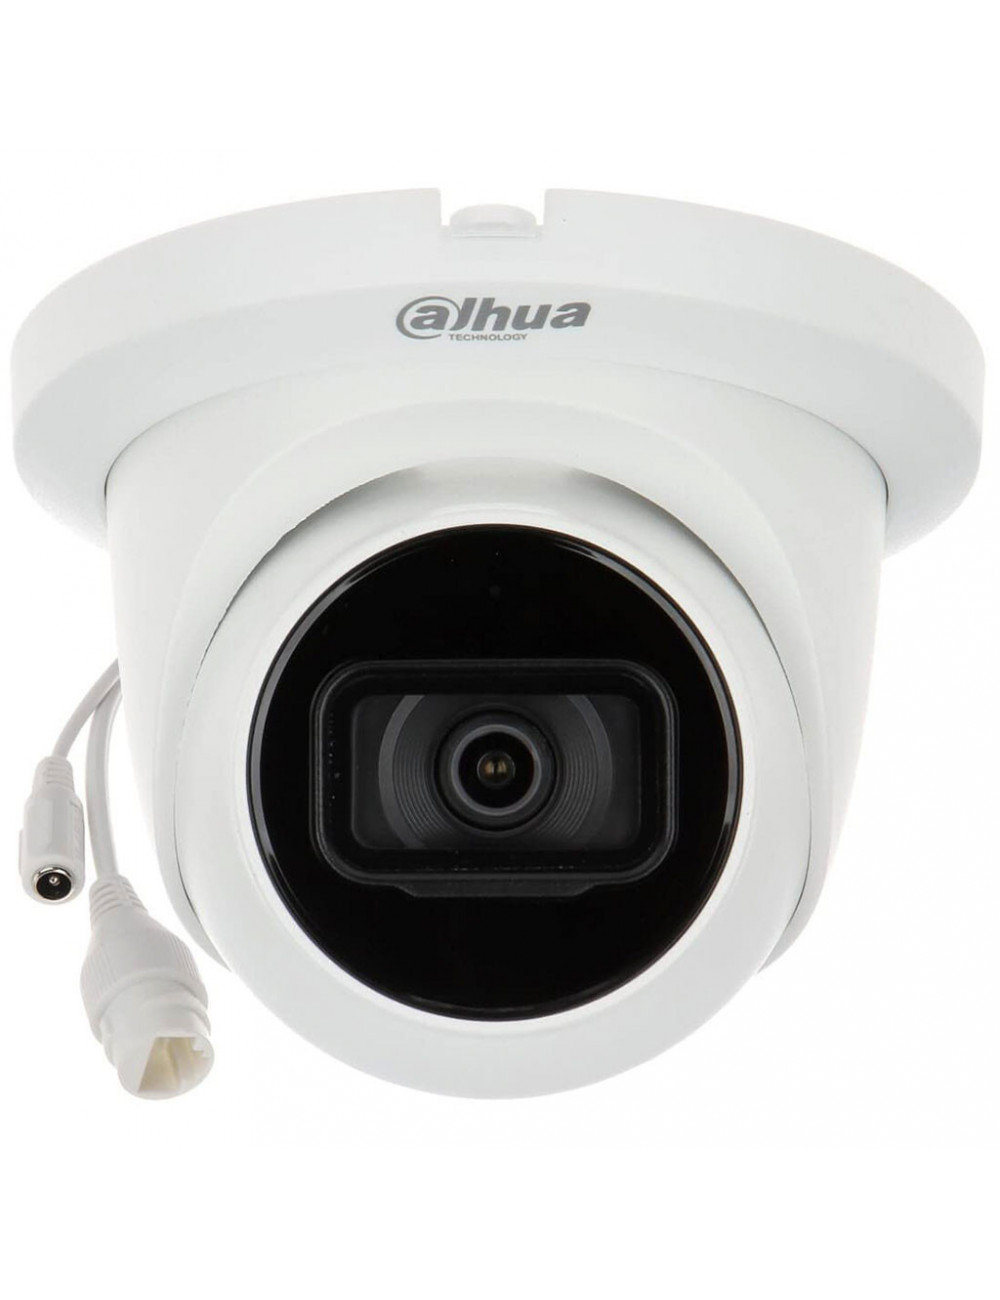 Dahua IPC-HDW2230T-AS-S2 - Caméra de Surveillance IR 2MP